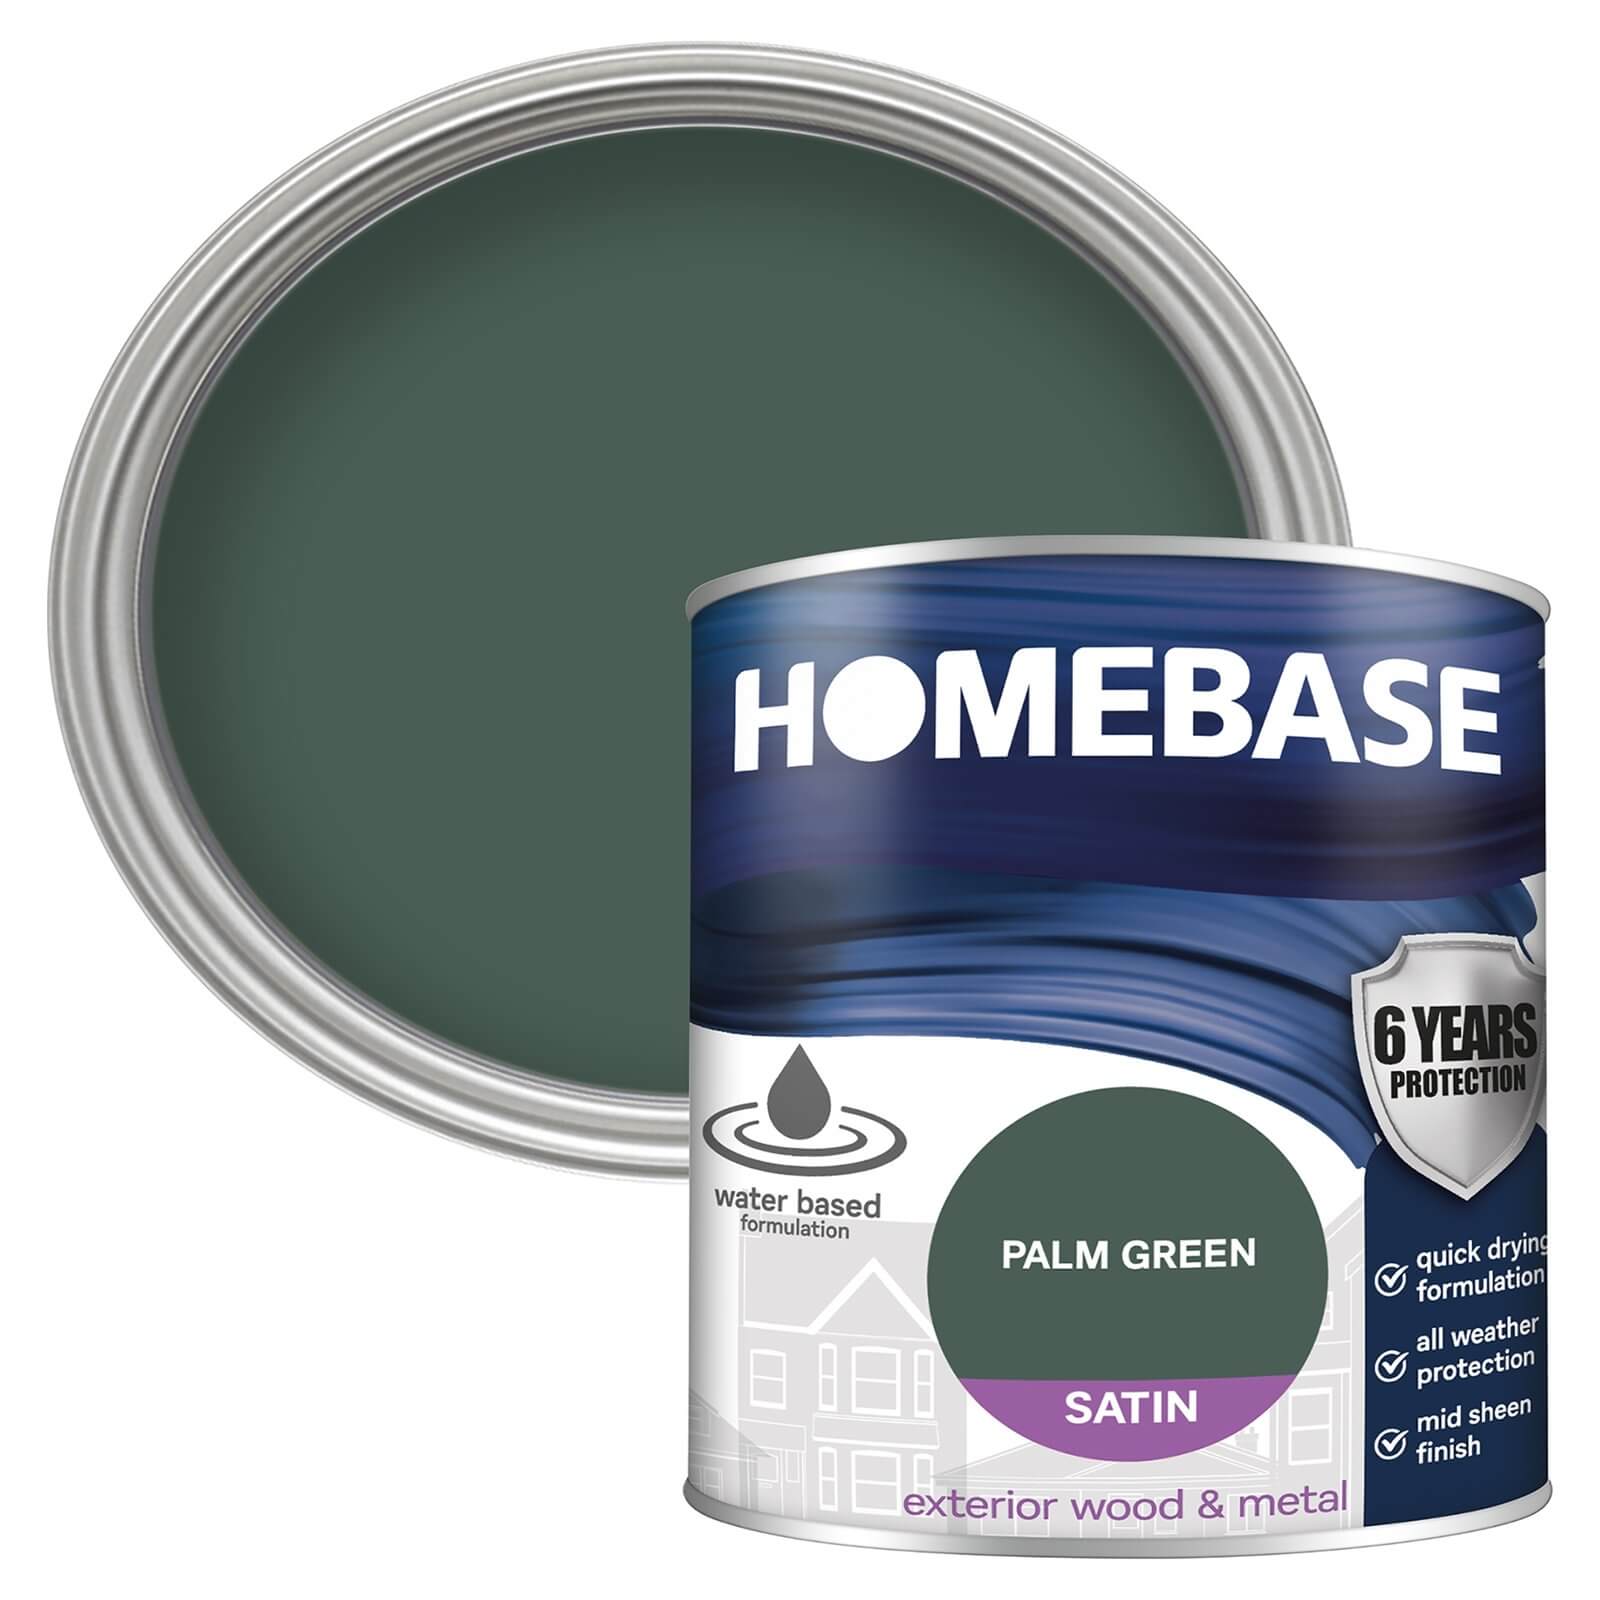 Homebase Exterior Satin Paint - Palm Green 750ml